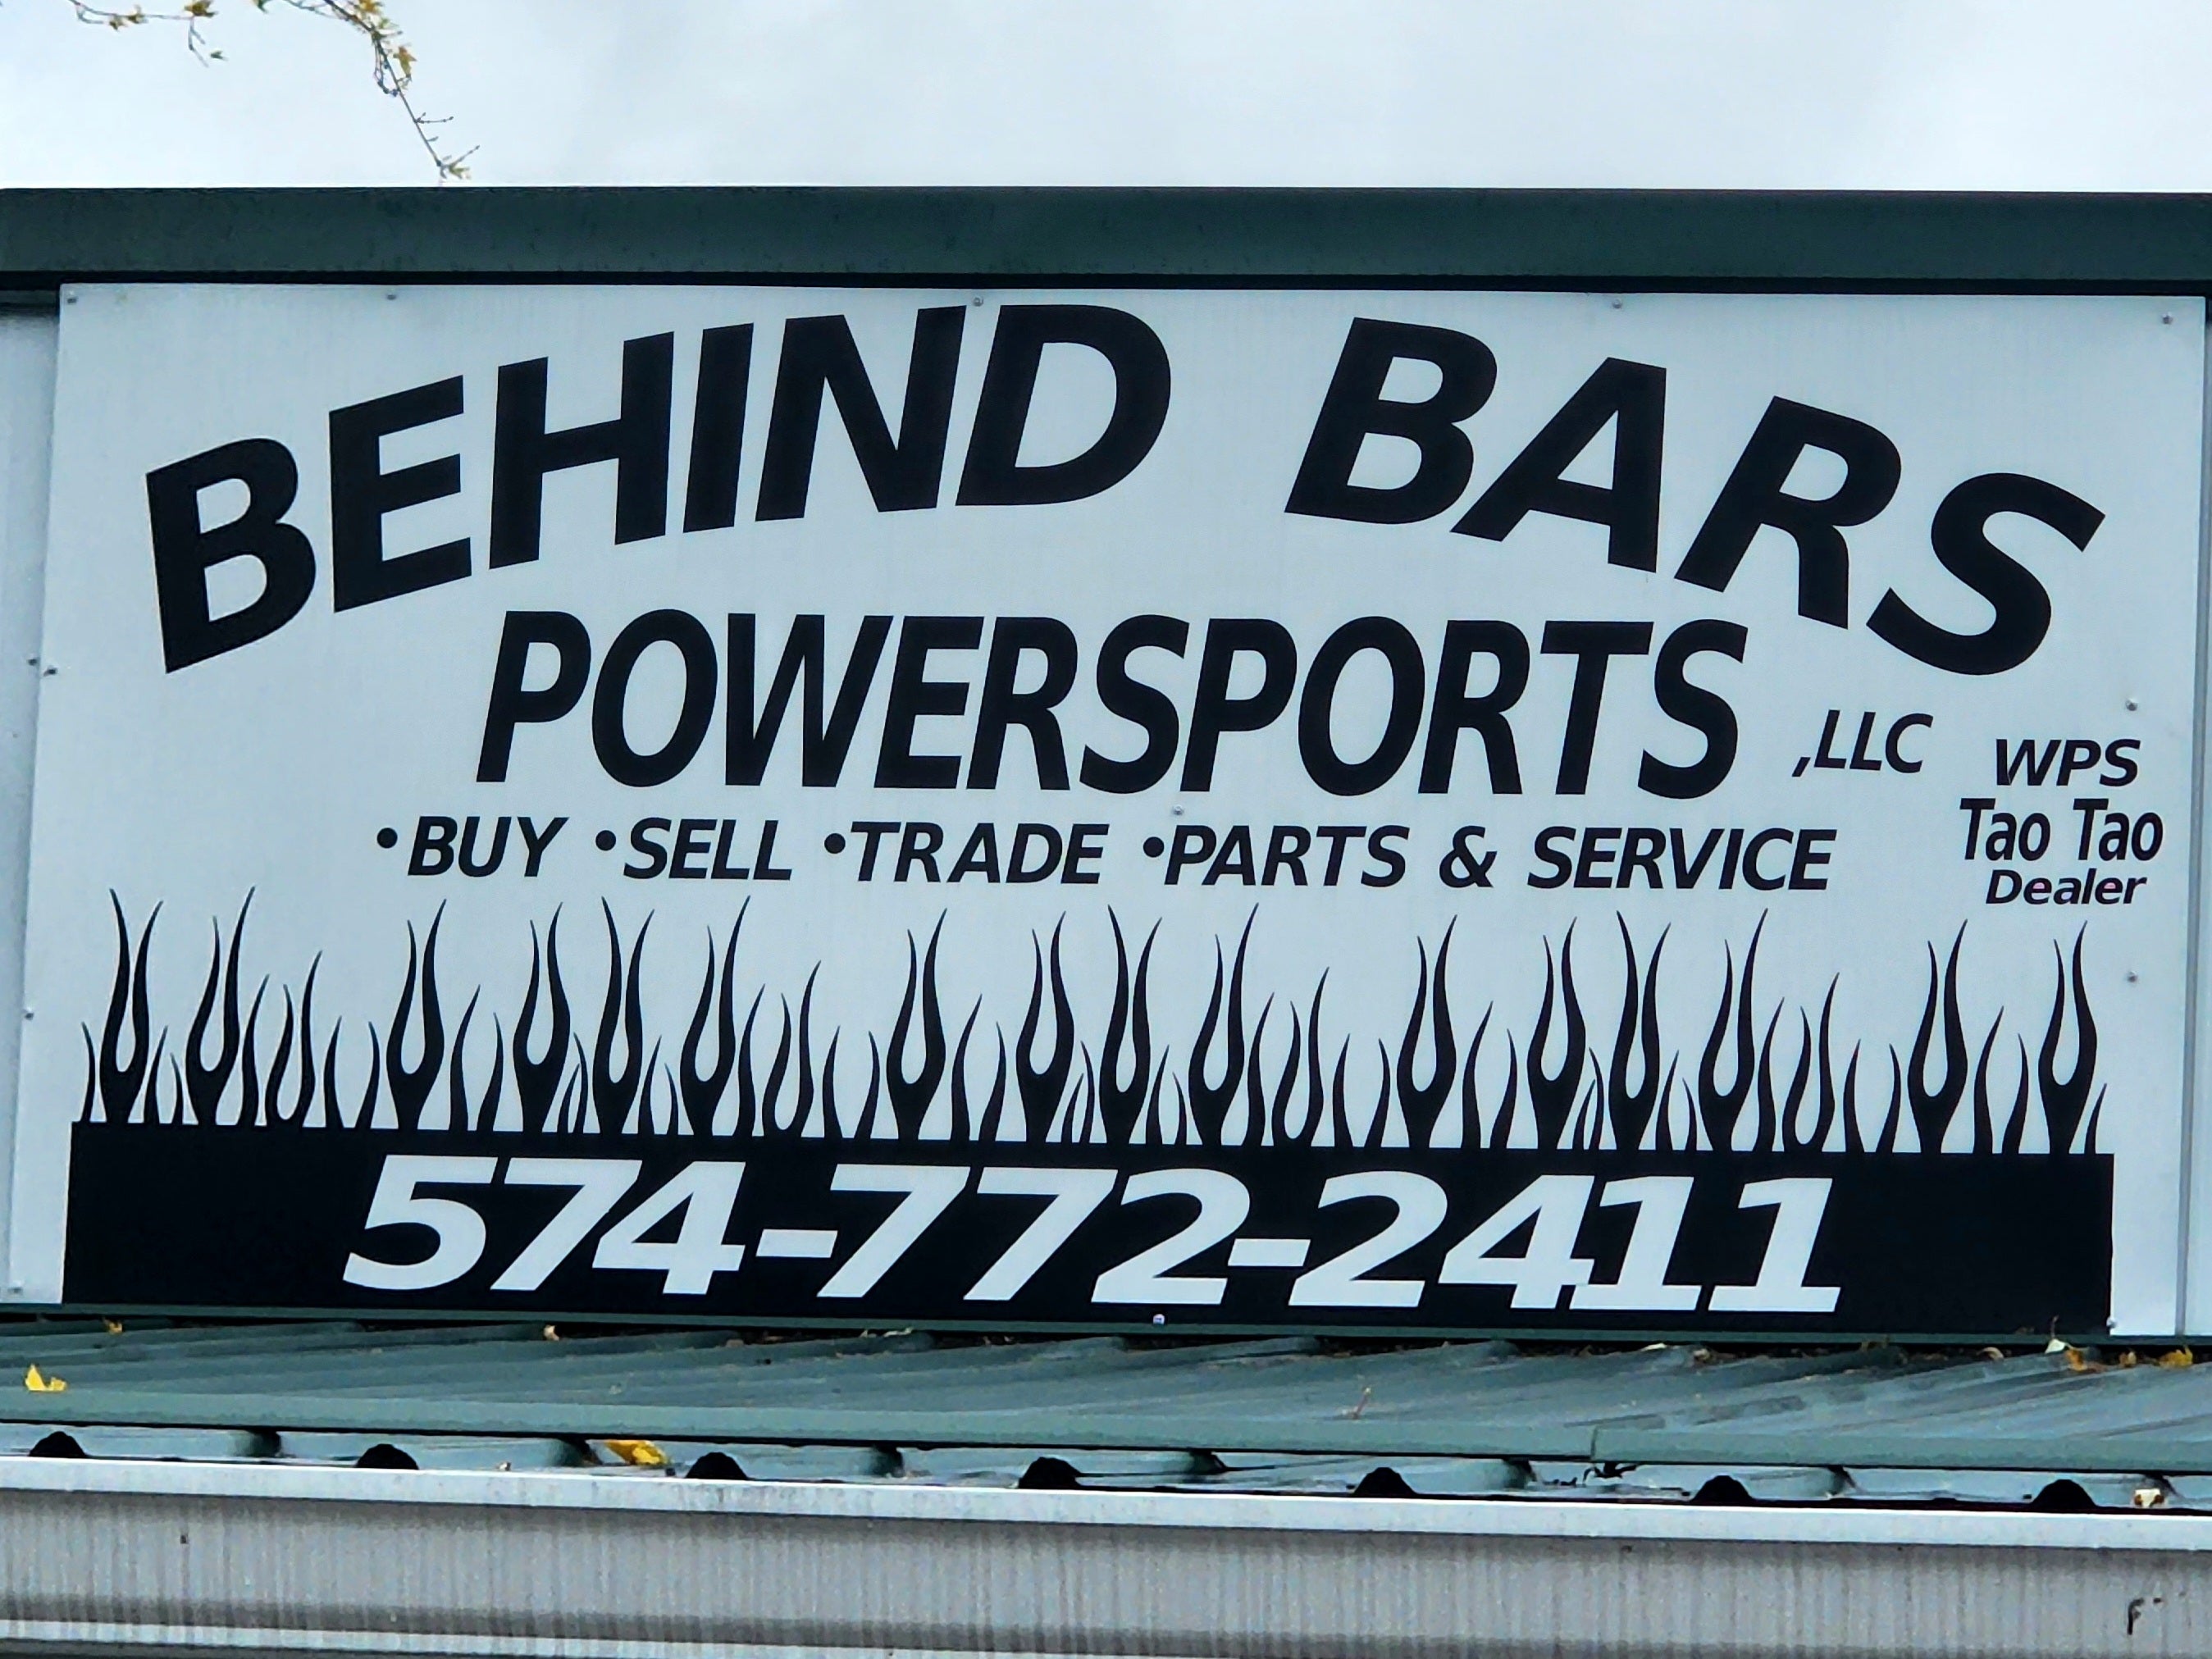 Behind Bars Powersports, LLC